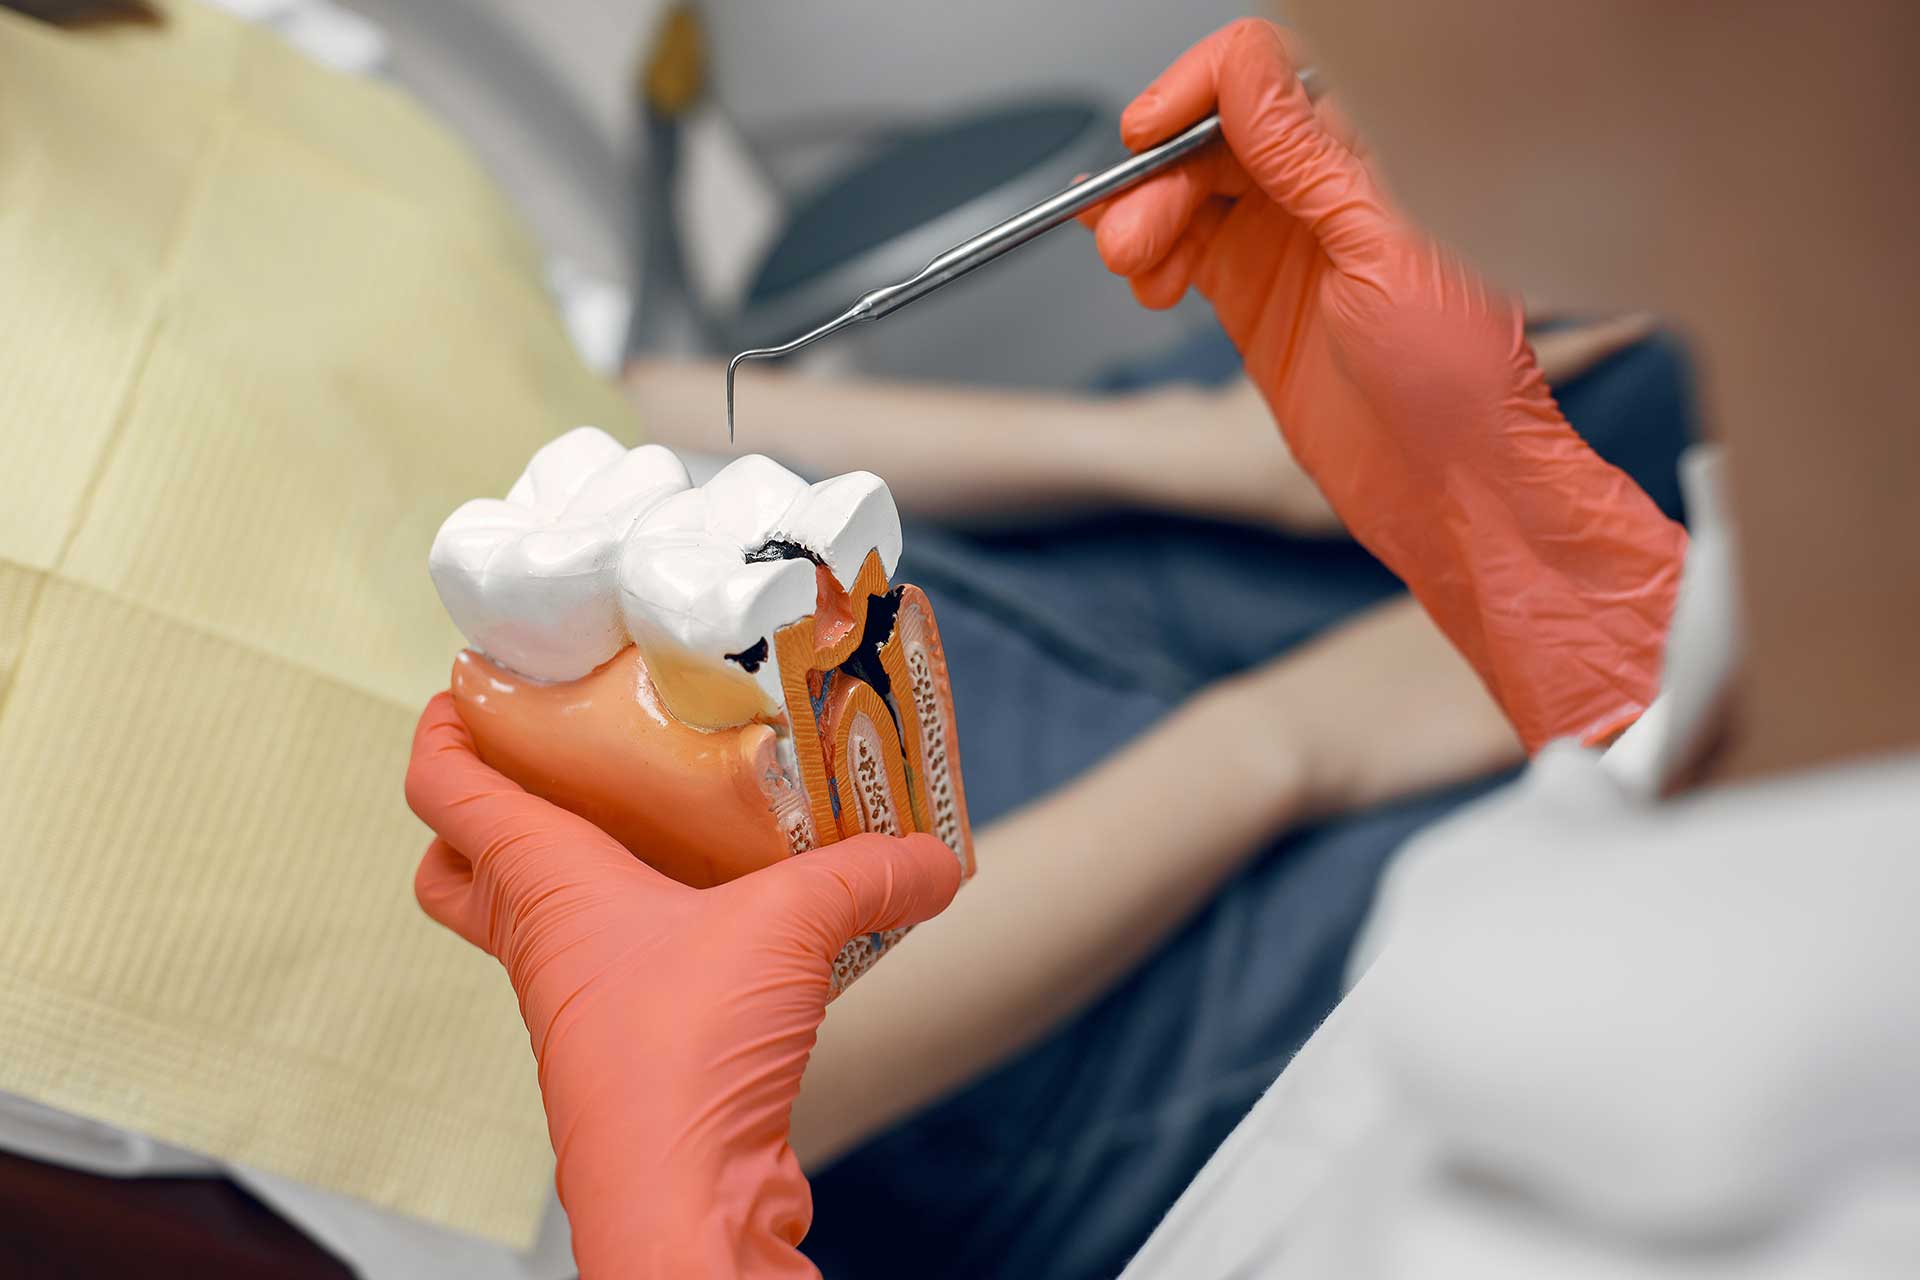 Lifespan and Care of Dental Fillings